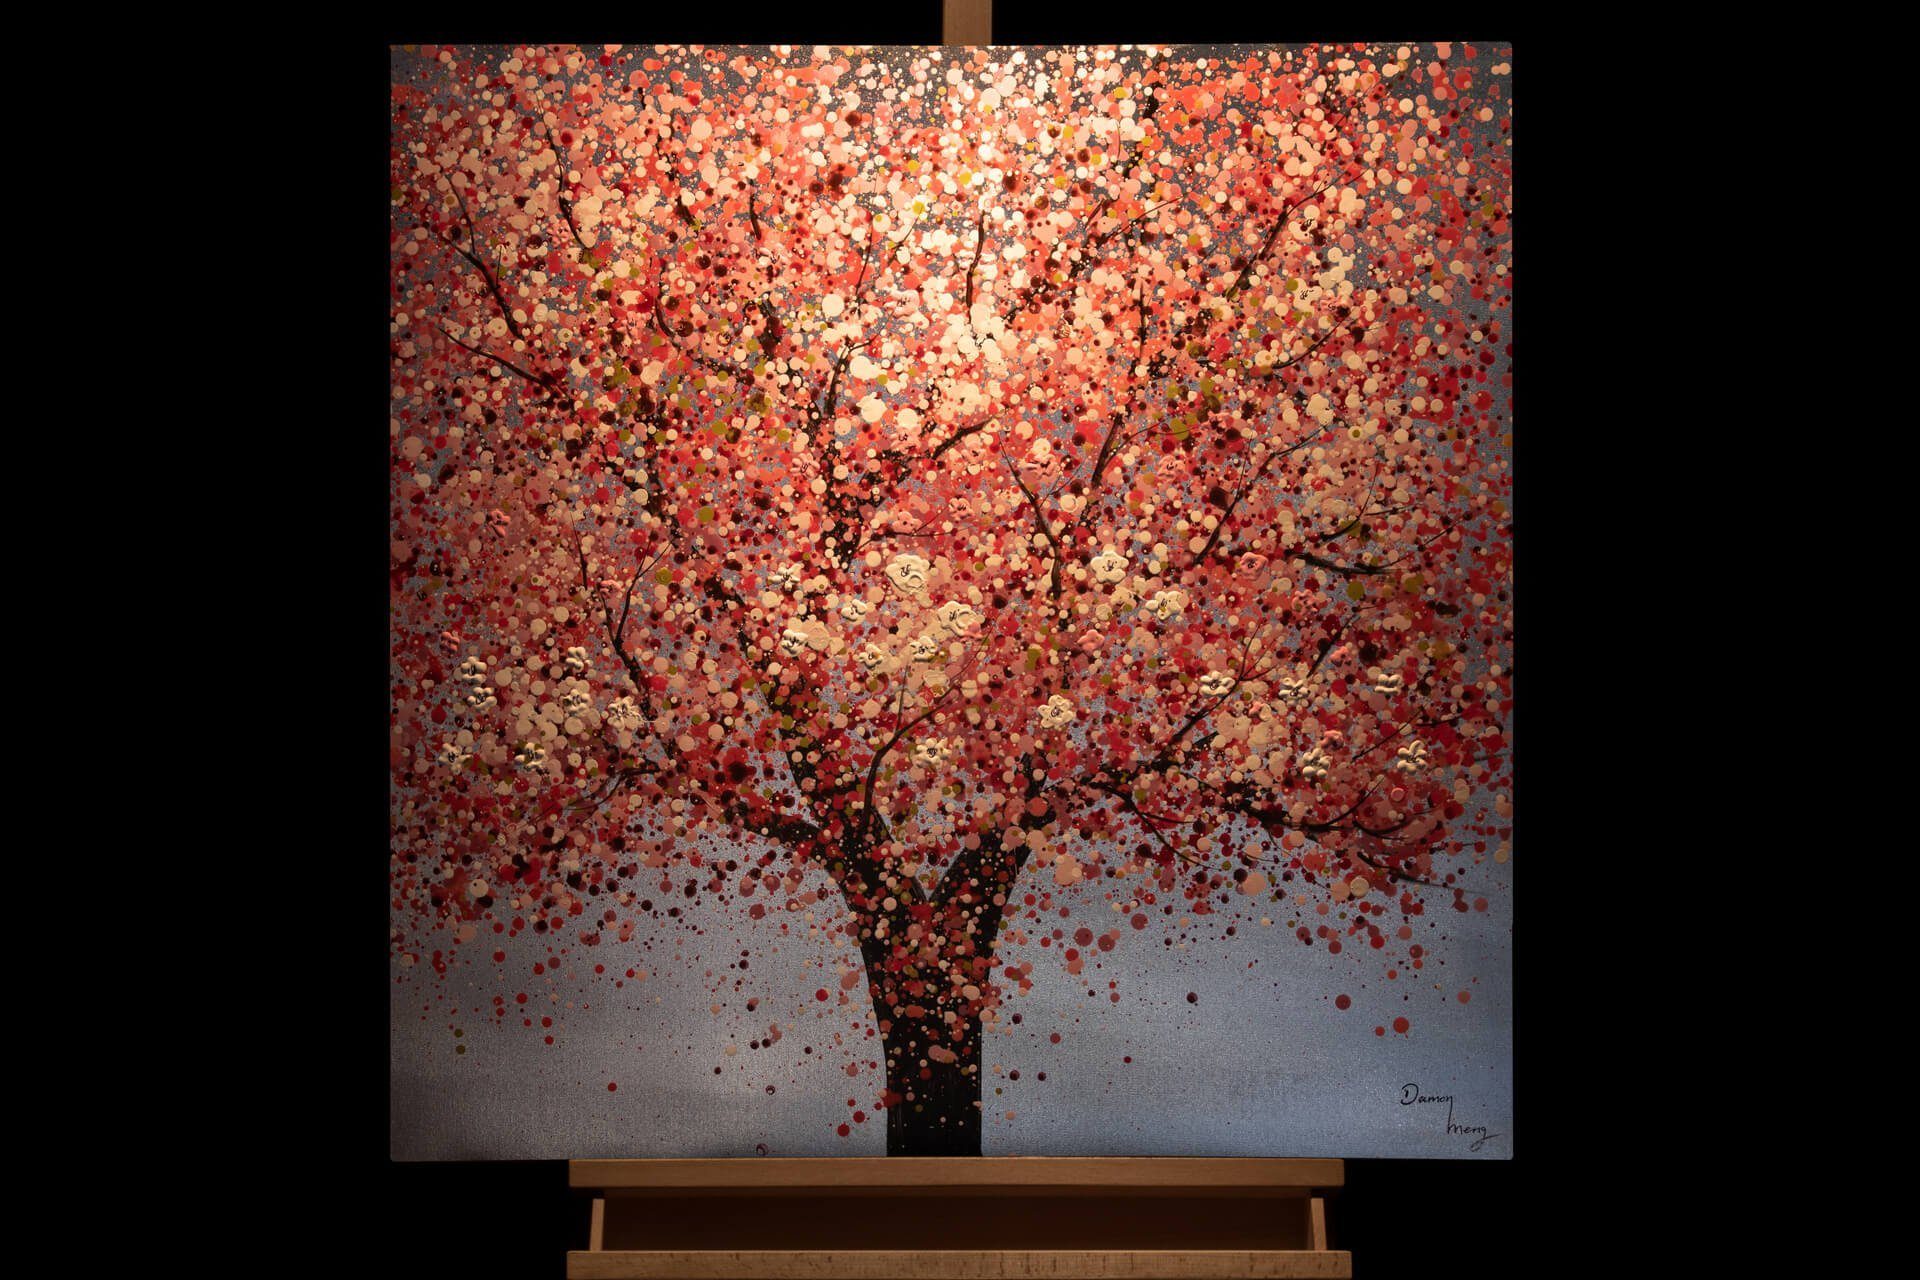 KUNSTLOFT Gemälde Kirschblütenzauber Wohnzimmer Leinwandbild HANDGEMALT Wandbild cm, 100% 80x80